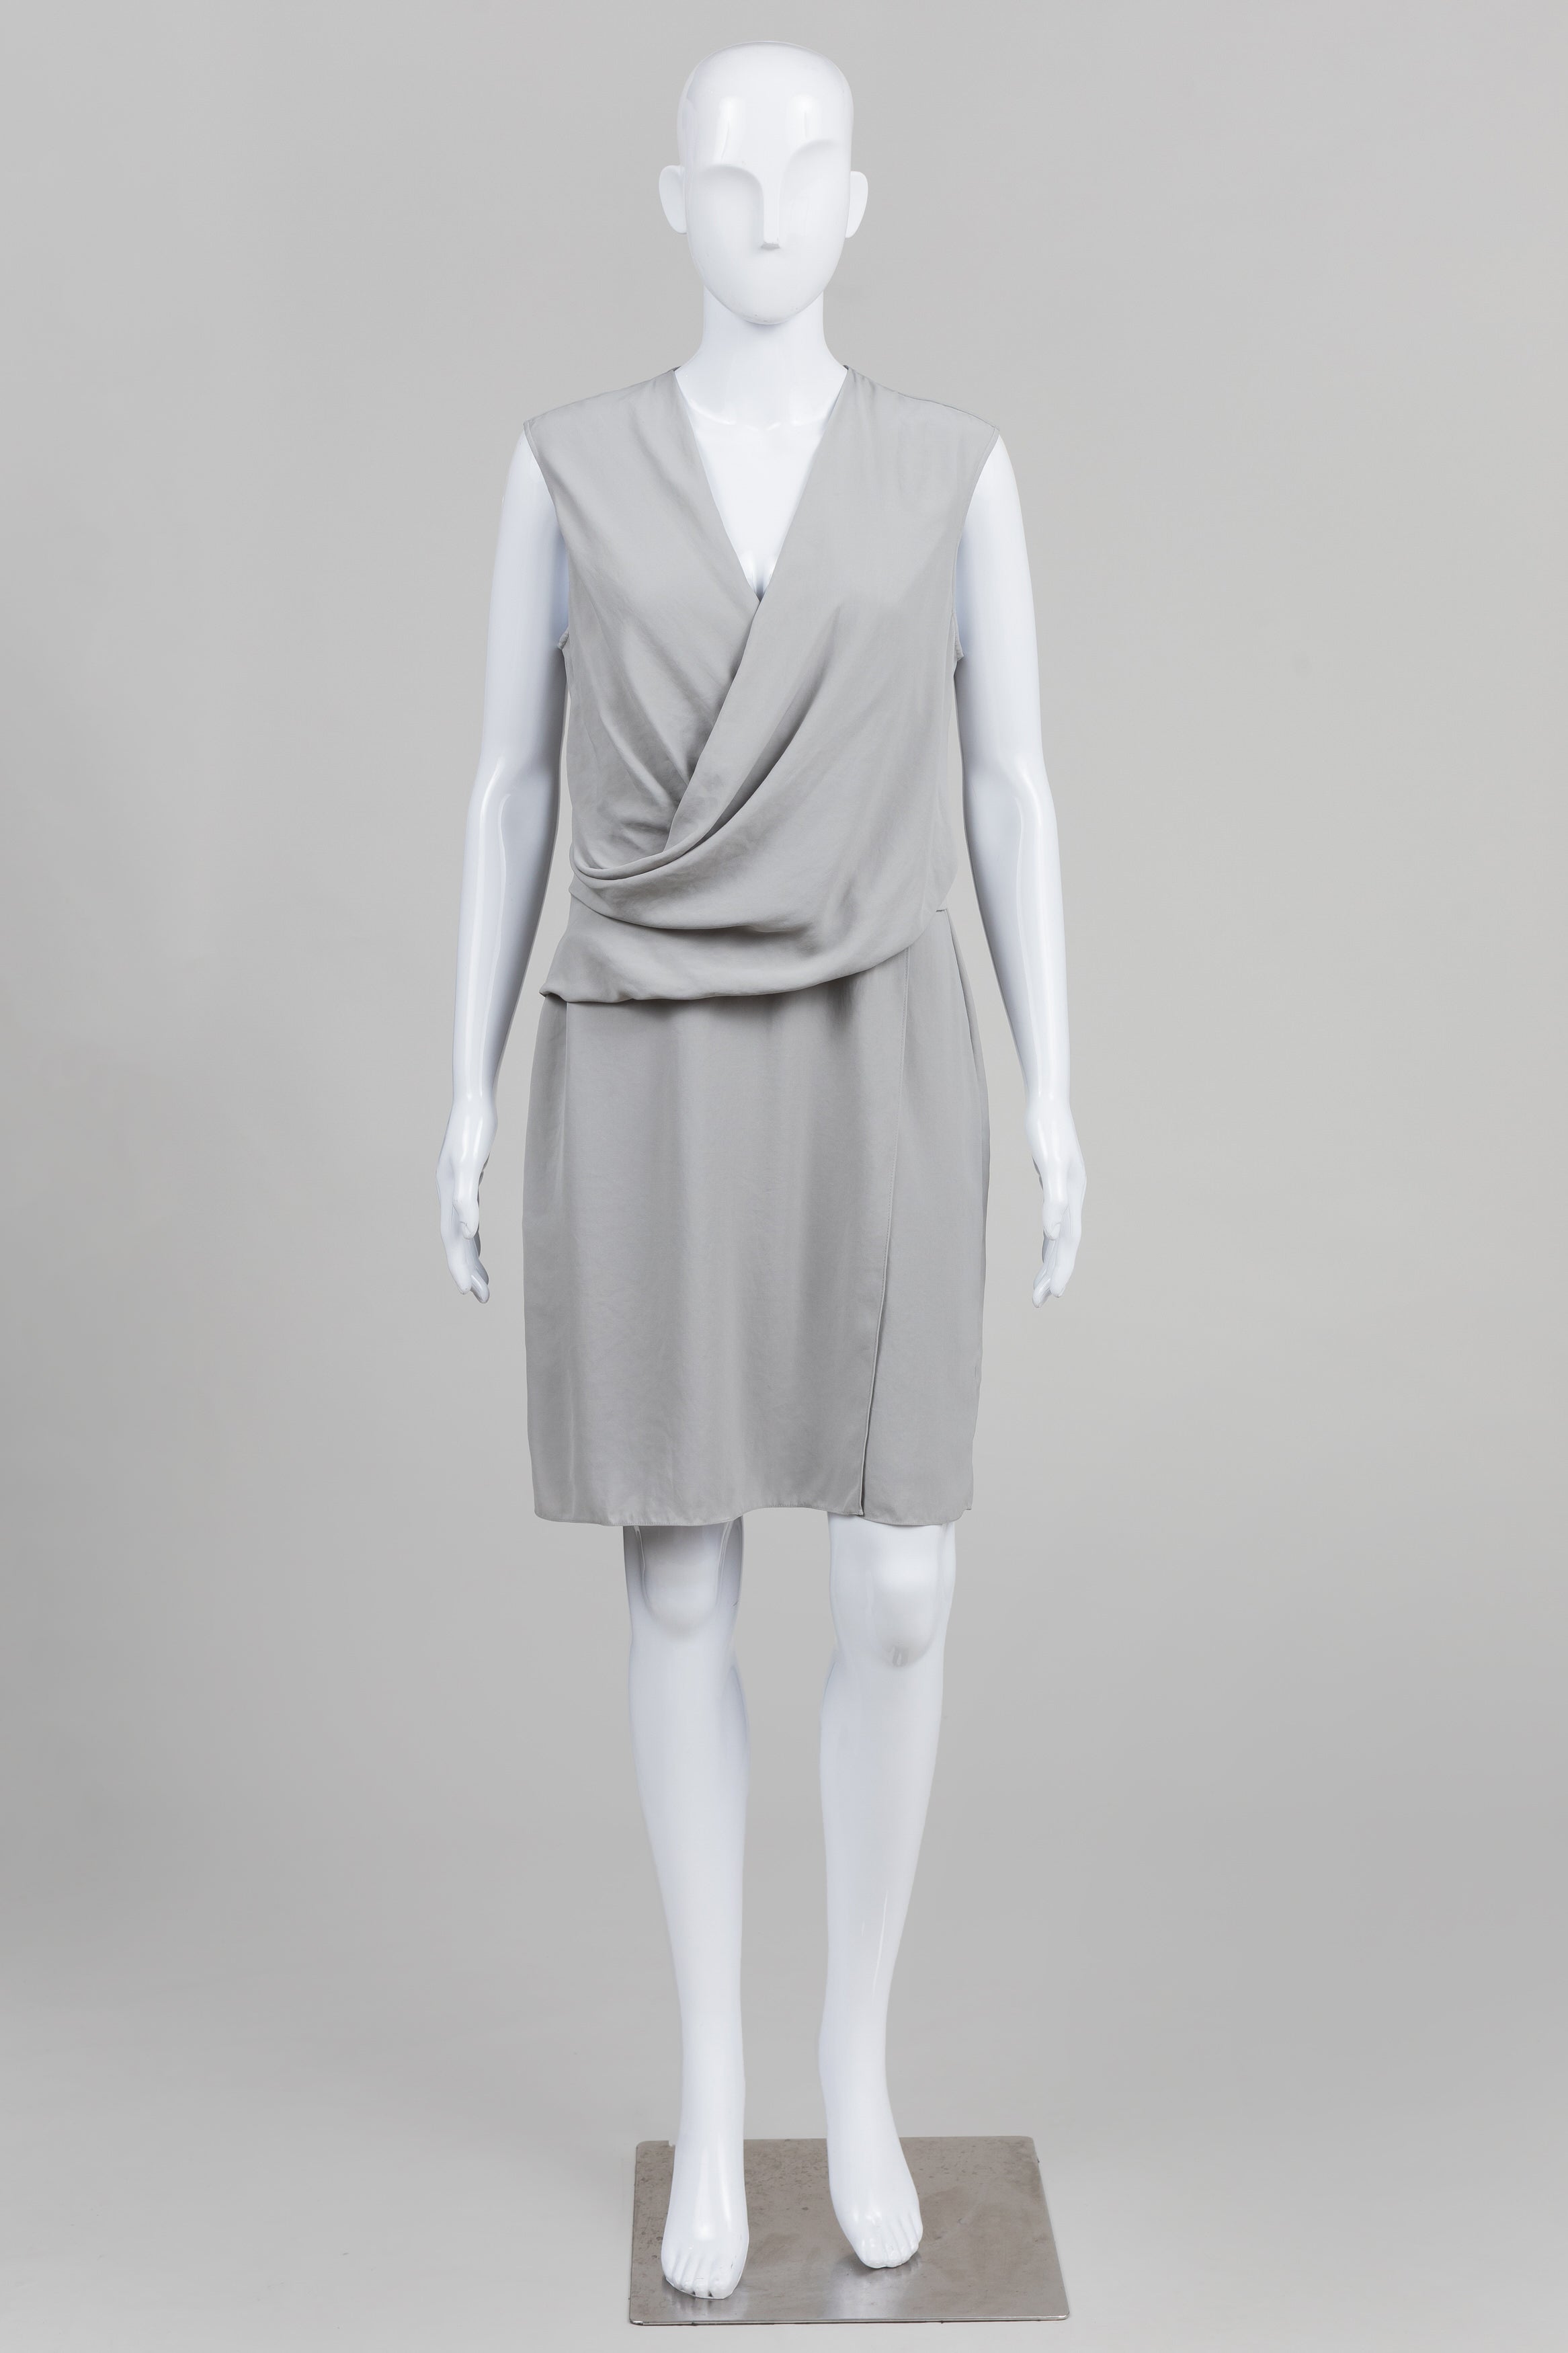 Helmut Lang grey sleeveless wrapover dress (M) *New w/ tags